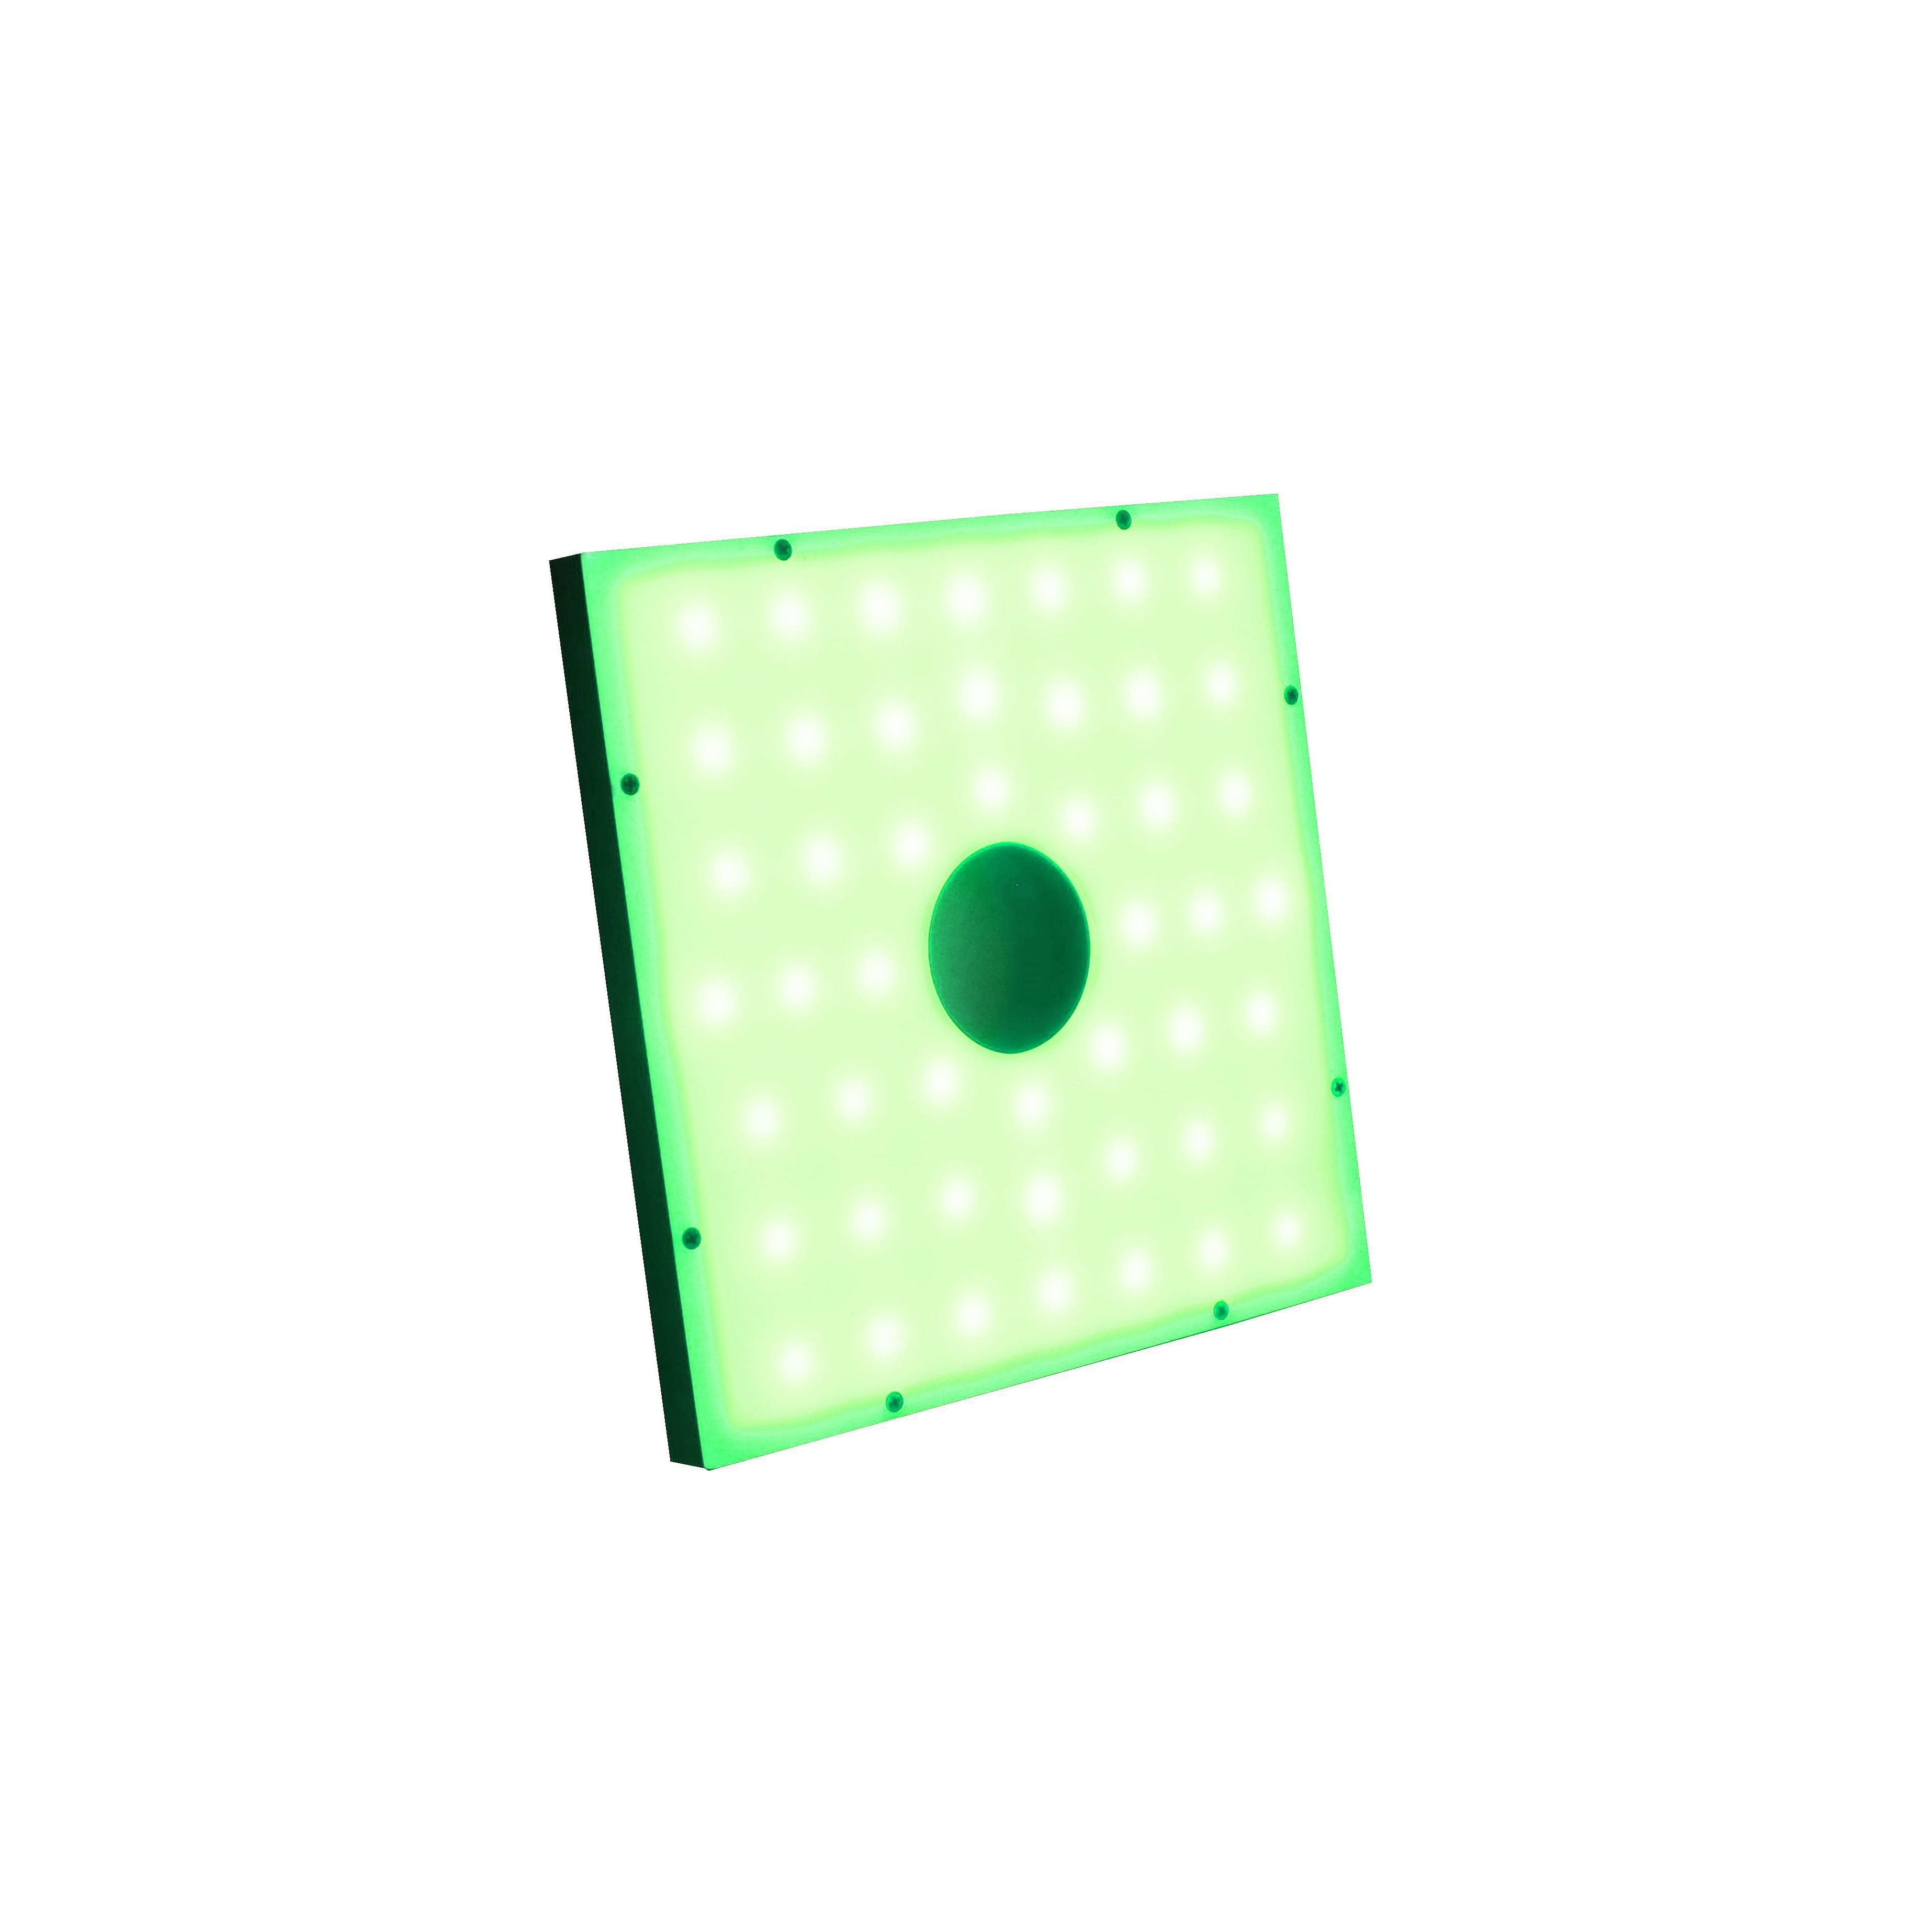 DSQ2-208/208 Diffused Square Panel Lights – Green